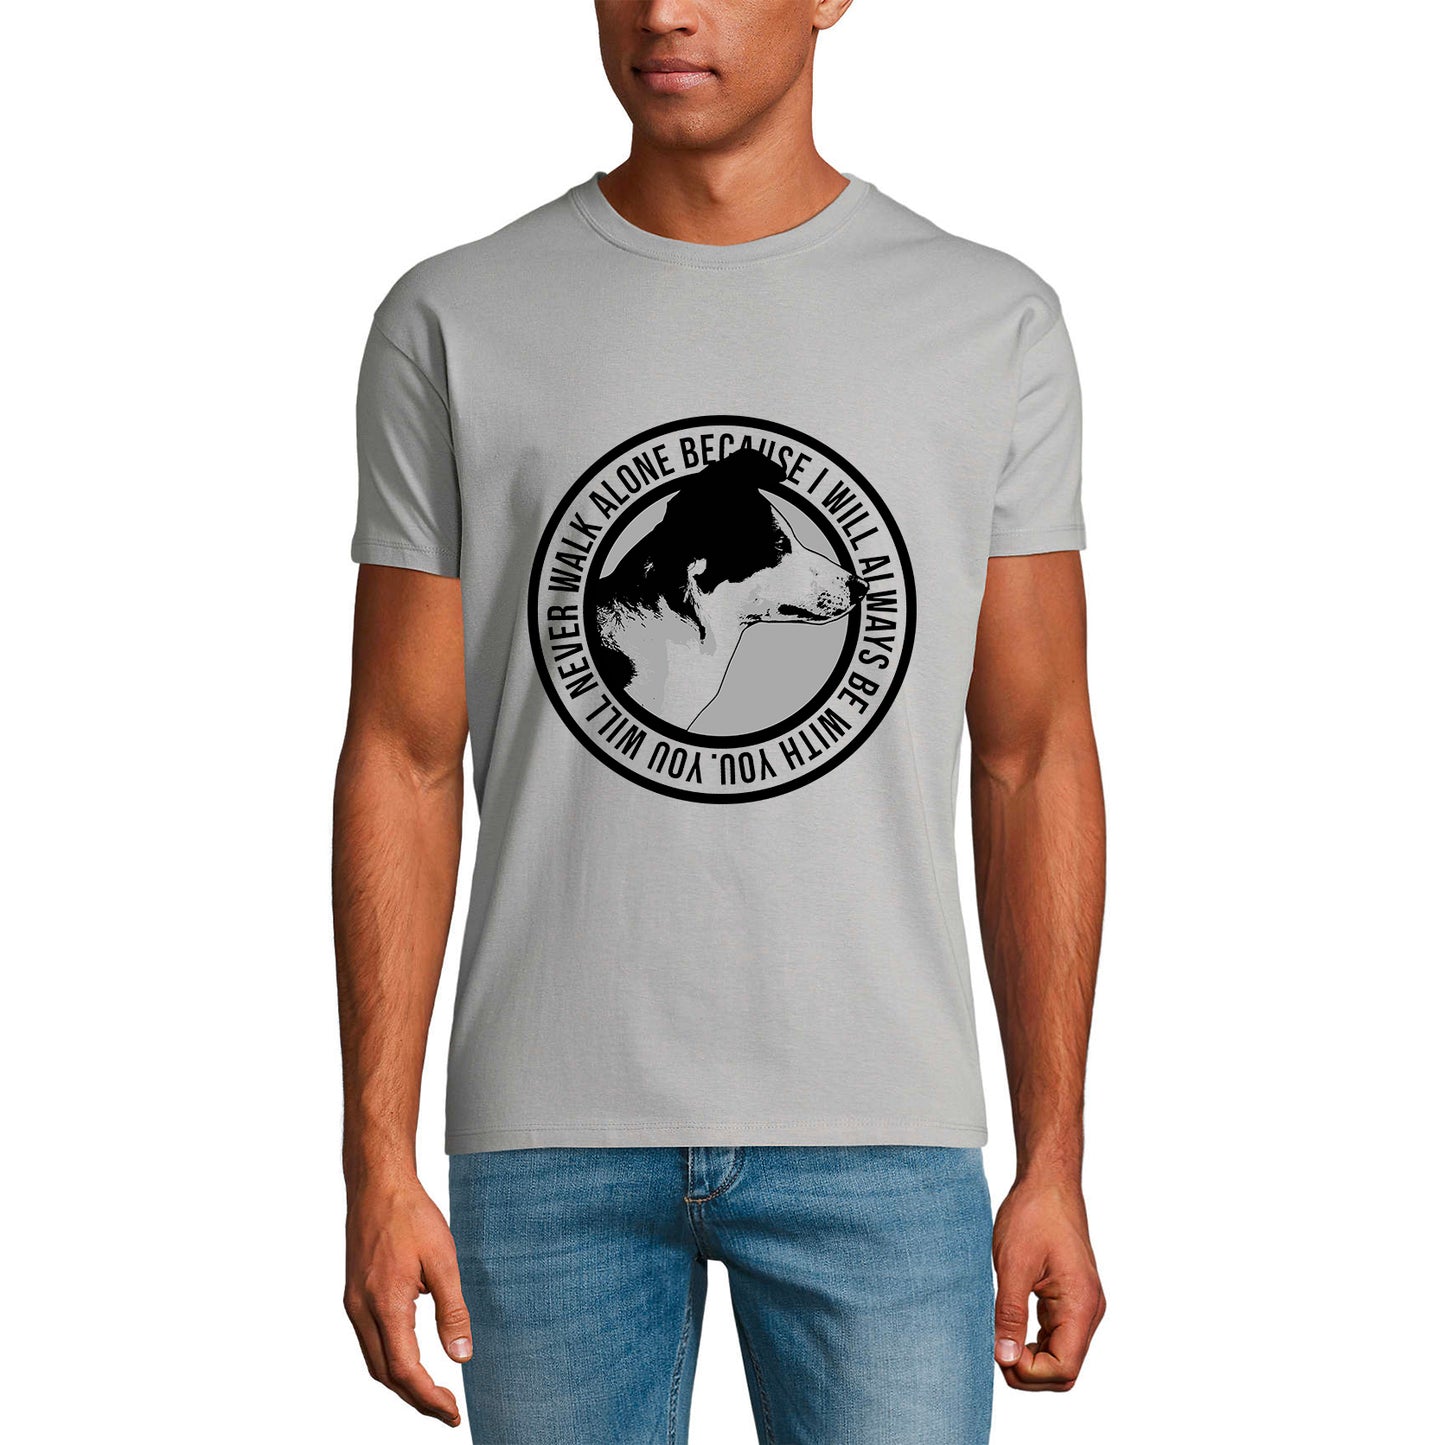 ULTRABASIC Men's T-Shirt You Will Never Walk Alone - Dog Best Friend Shirt for Men